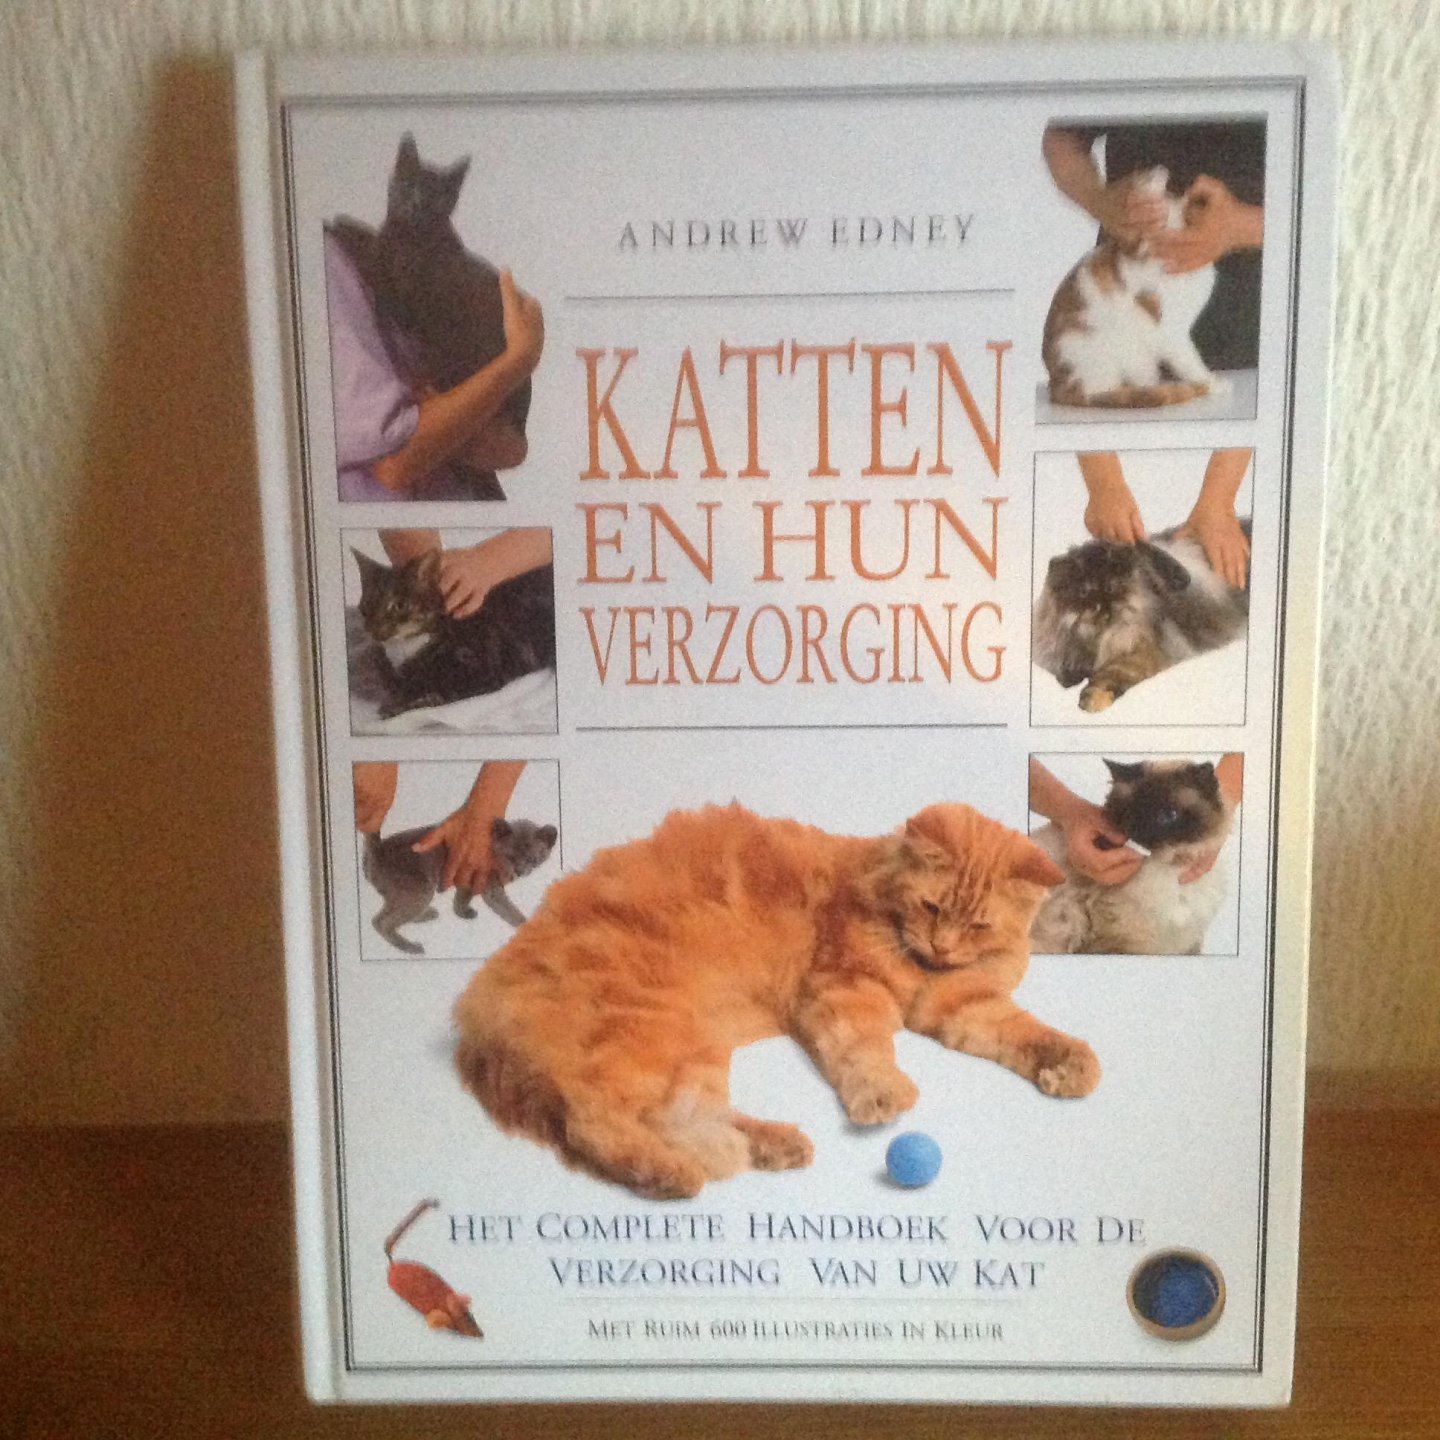 Edney, A. - Katten en hun verzorging / druk 2